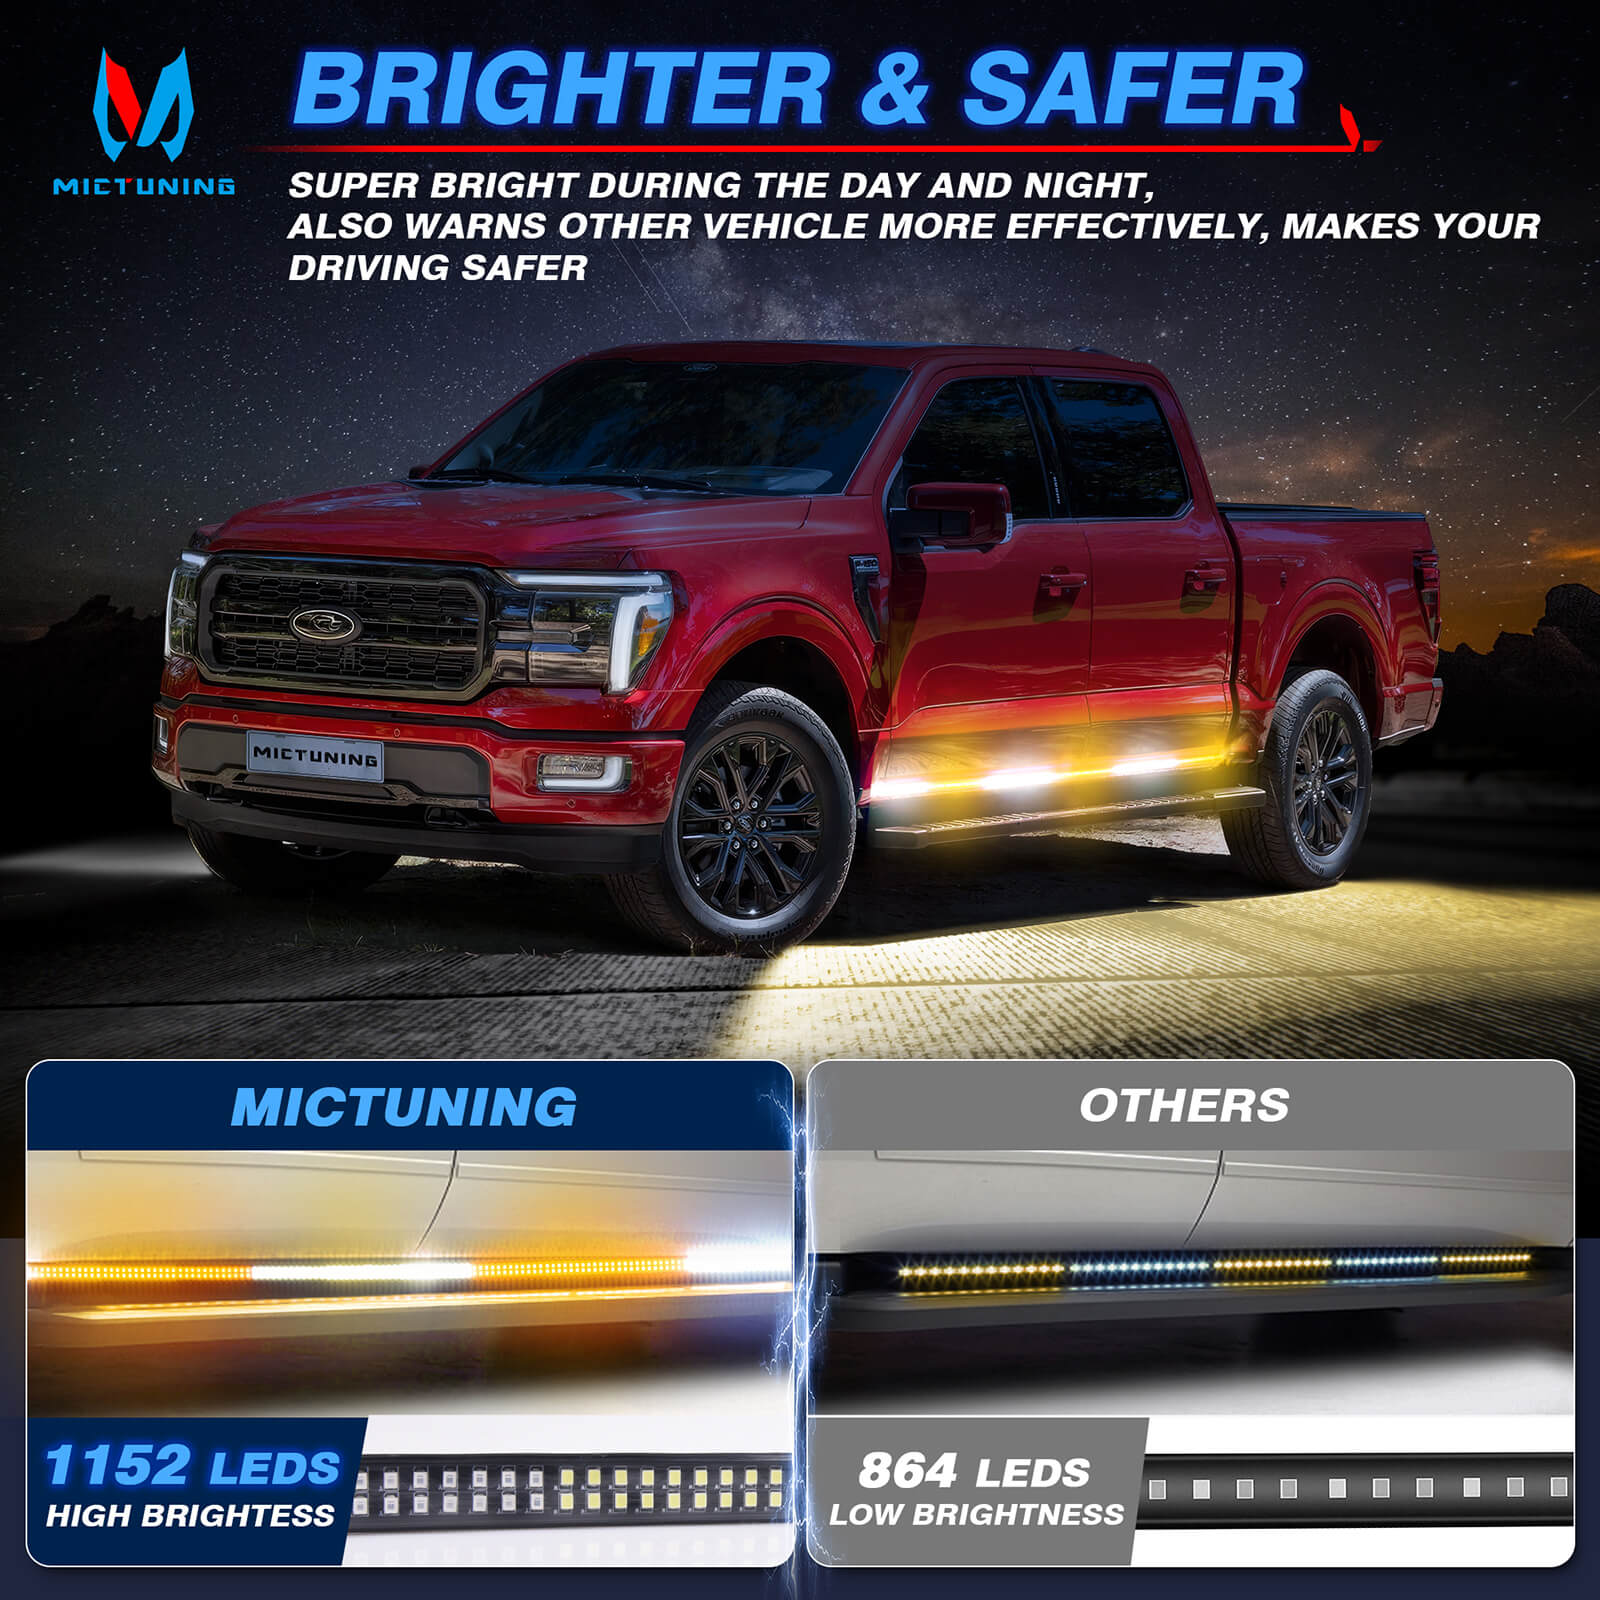 2PCS 70″ Running Board Lights Bar, 1152 LEDs Safety Warning Flashing Light Bar for Pickup Trucks Construction Vehicles, Amber White/Red White